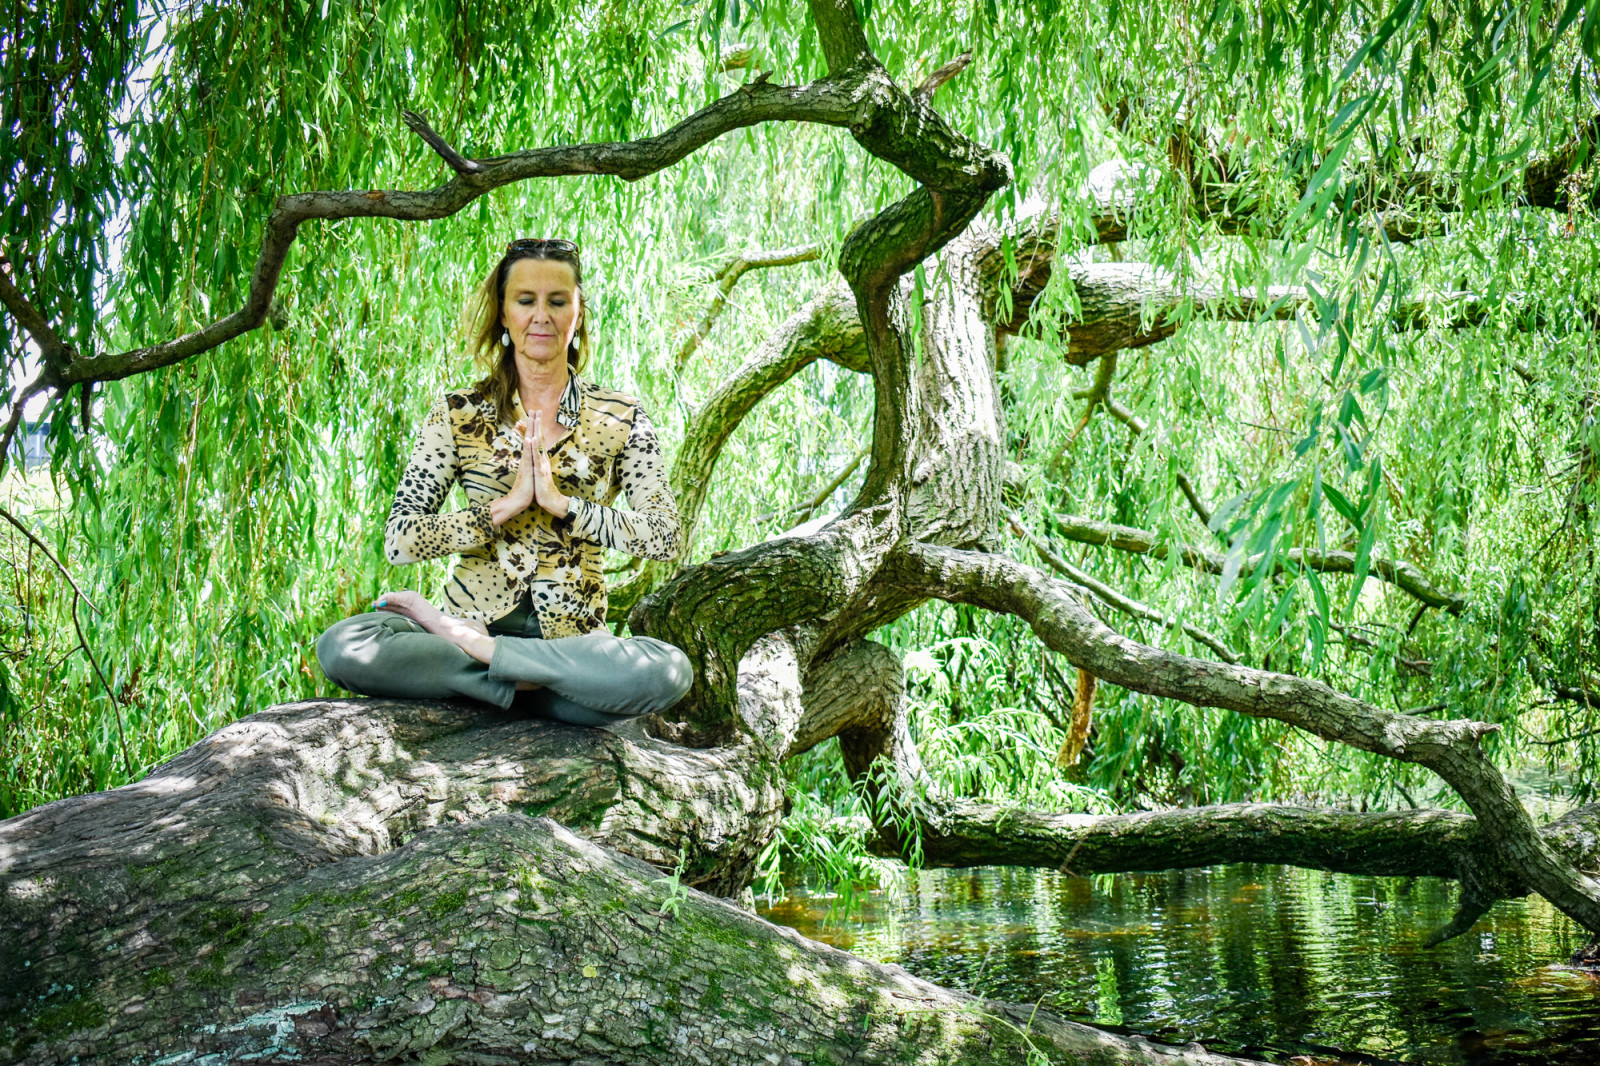 Yoga coach Suzy-Yoga Suzanna in Amsterdam on tree